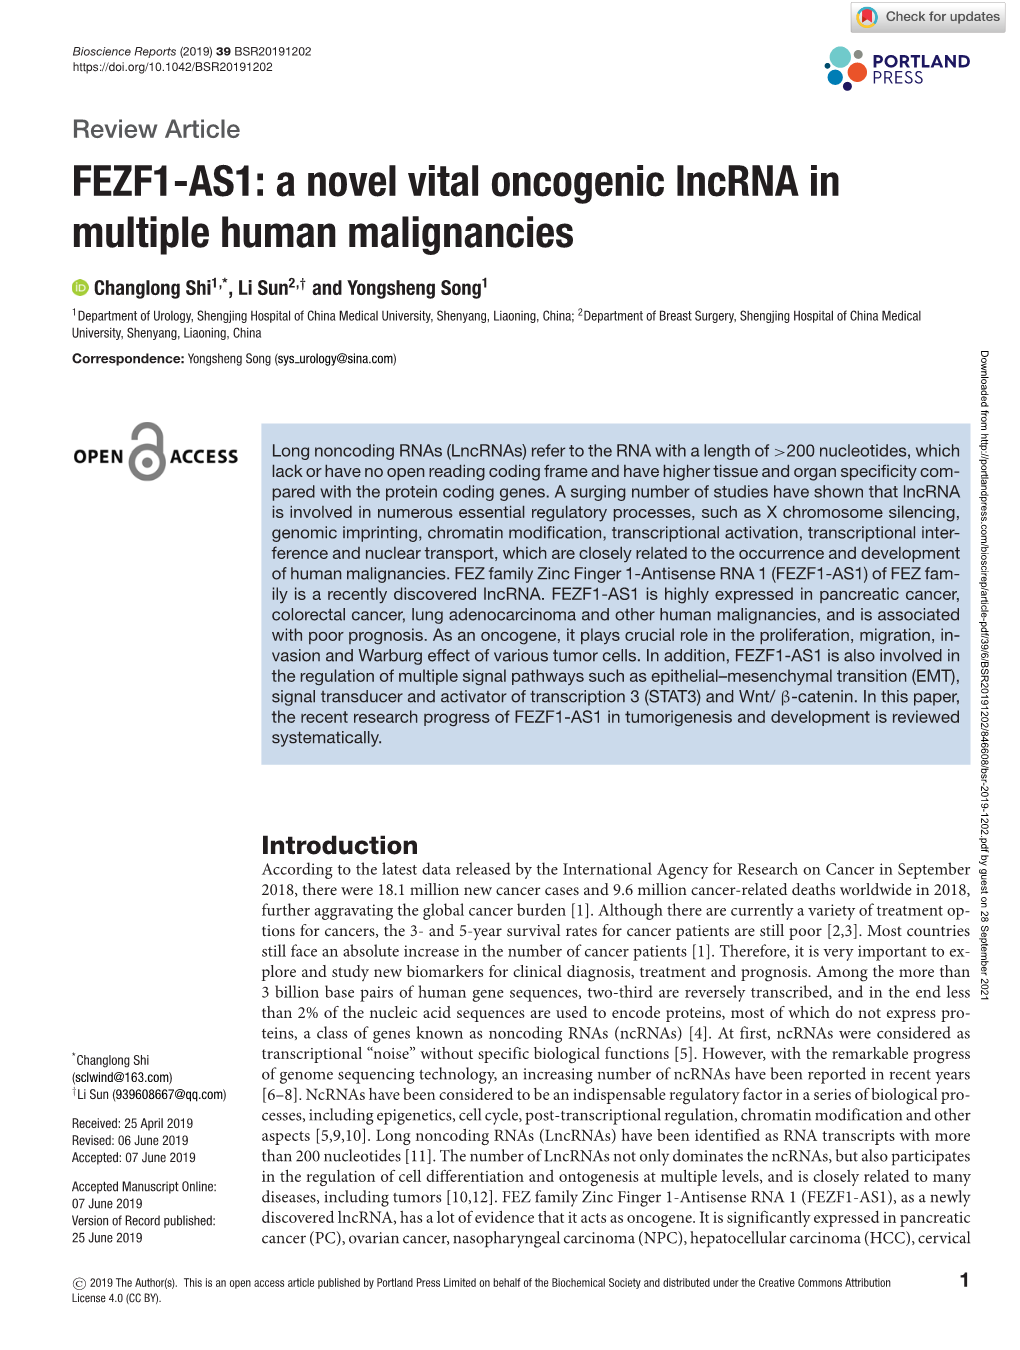 FEZF1-AS1: a Novel Vital Oncogenic Lncrna in Multiple Human Malignancies